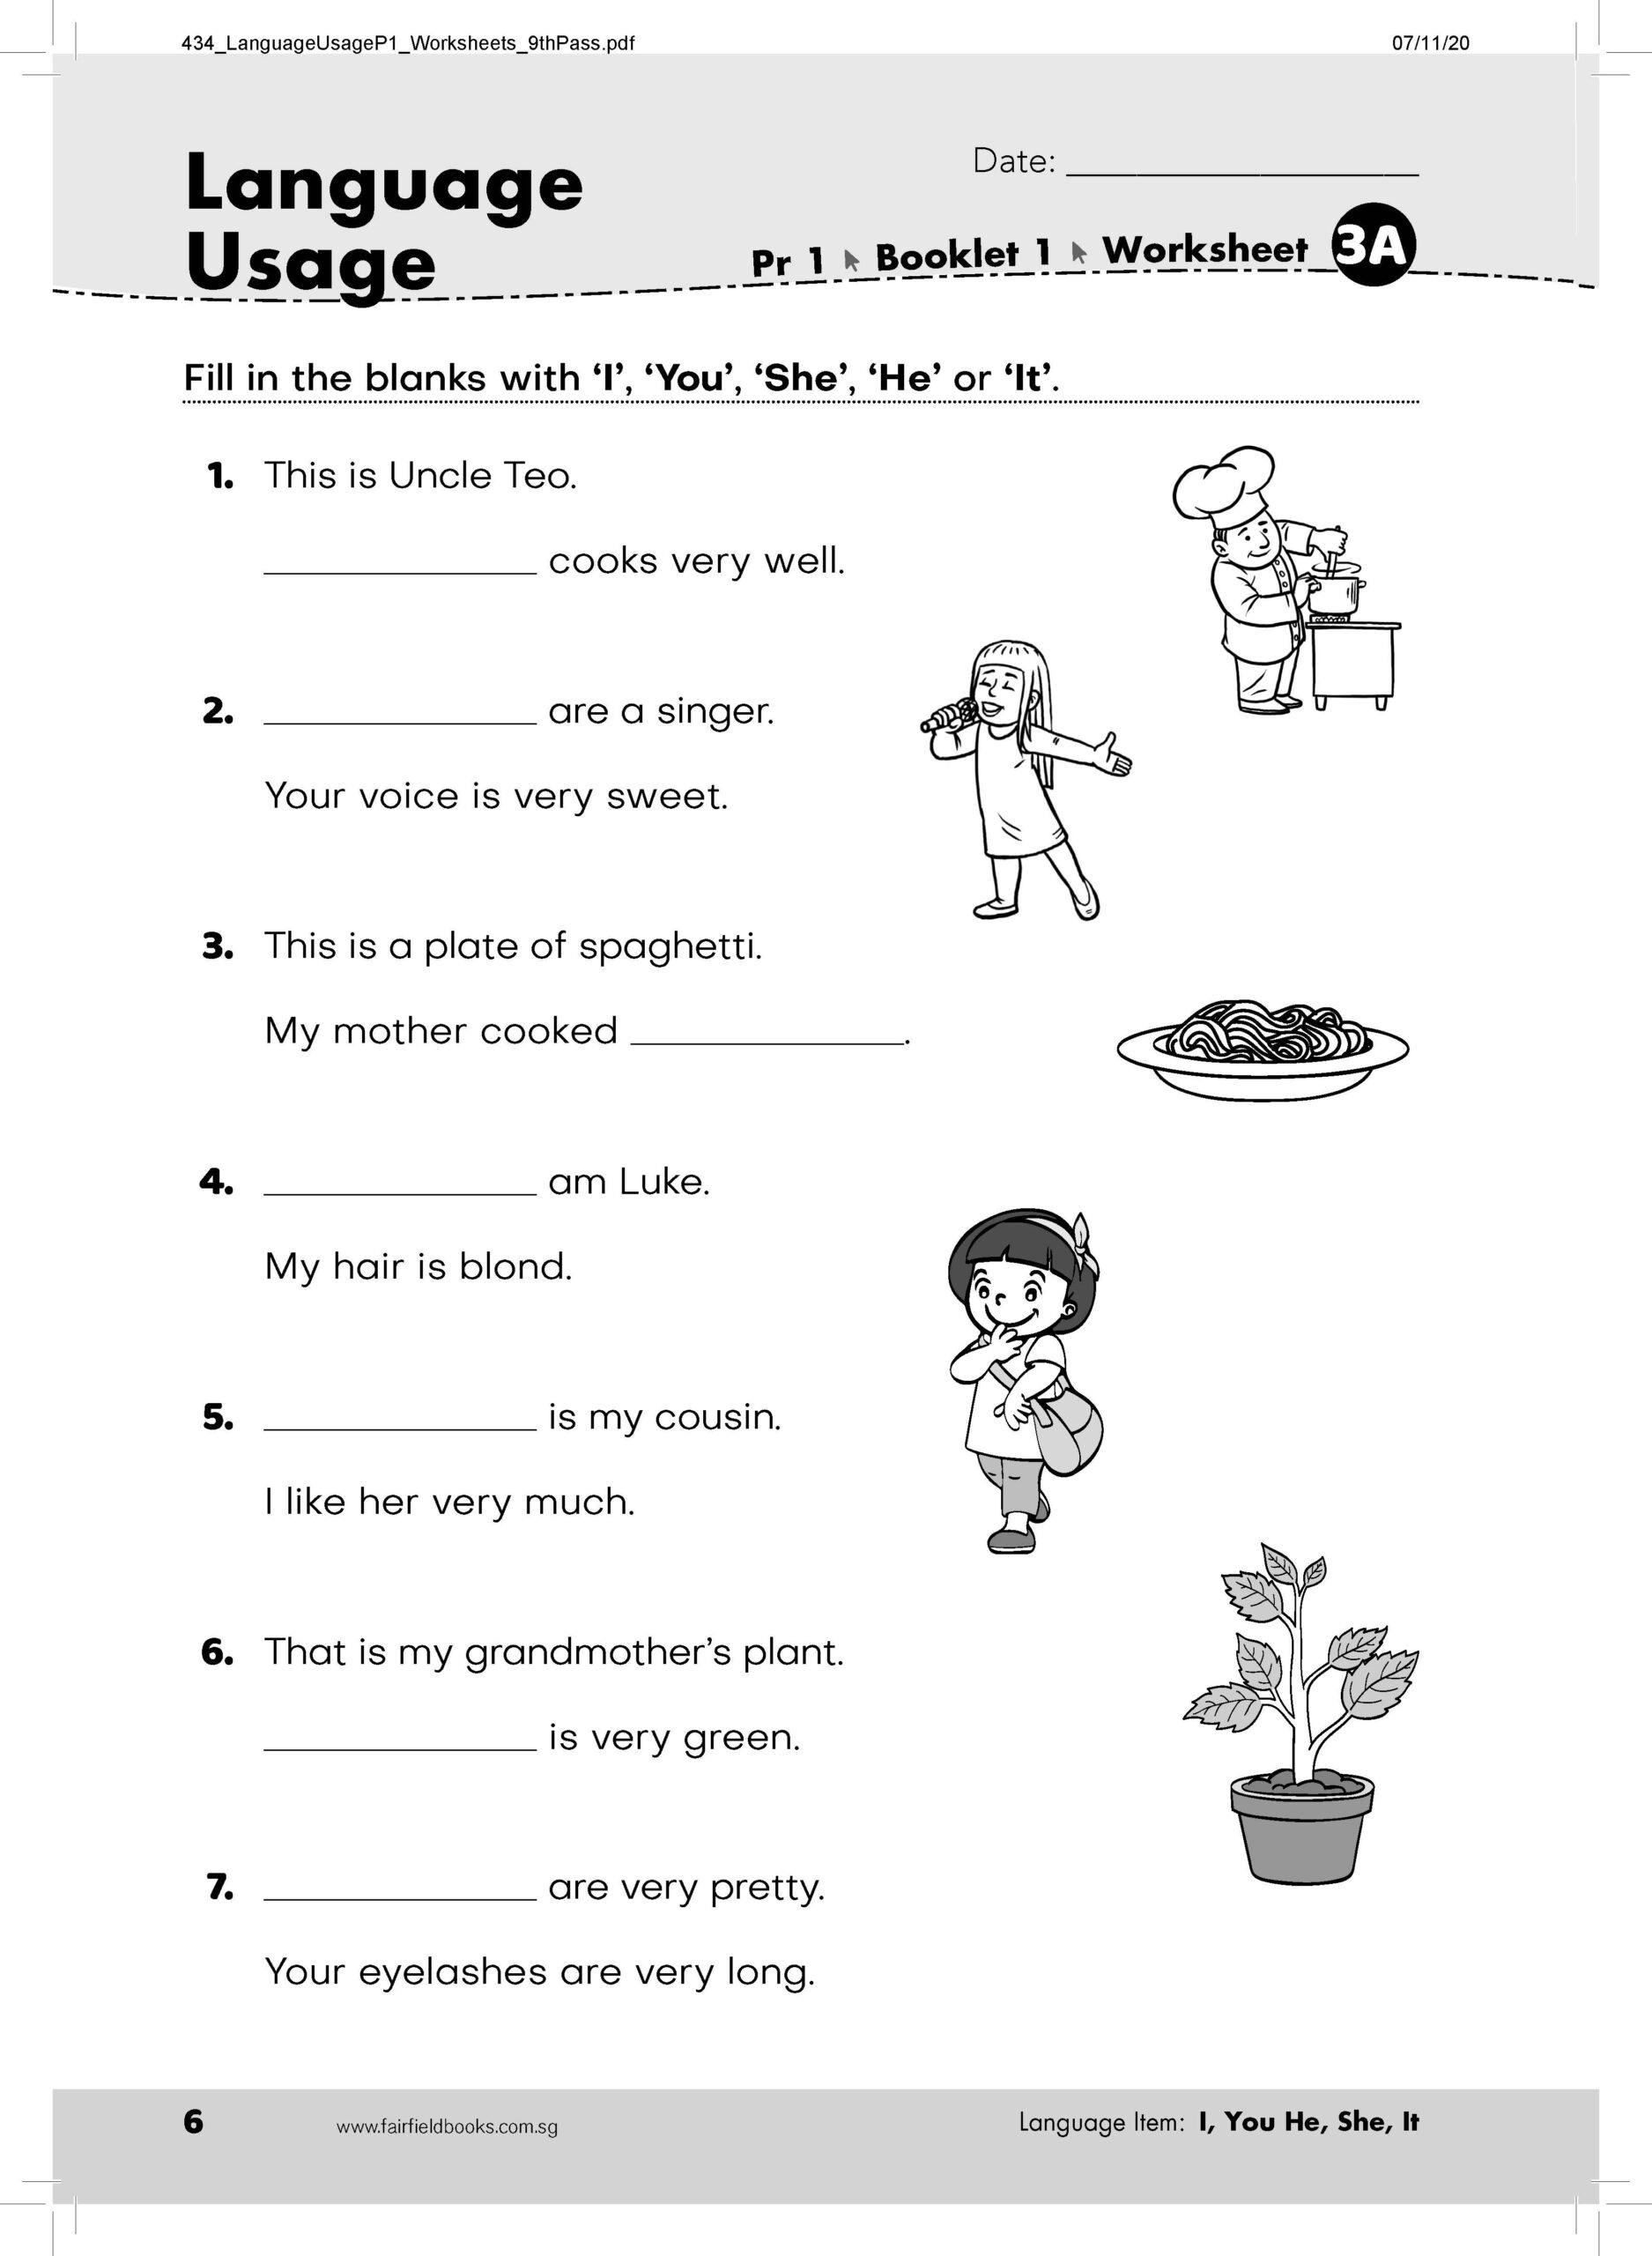 Primary 3 Language Usage English Worksheet OpenSchoolbag